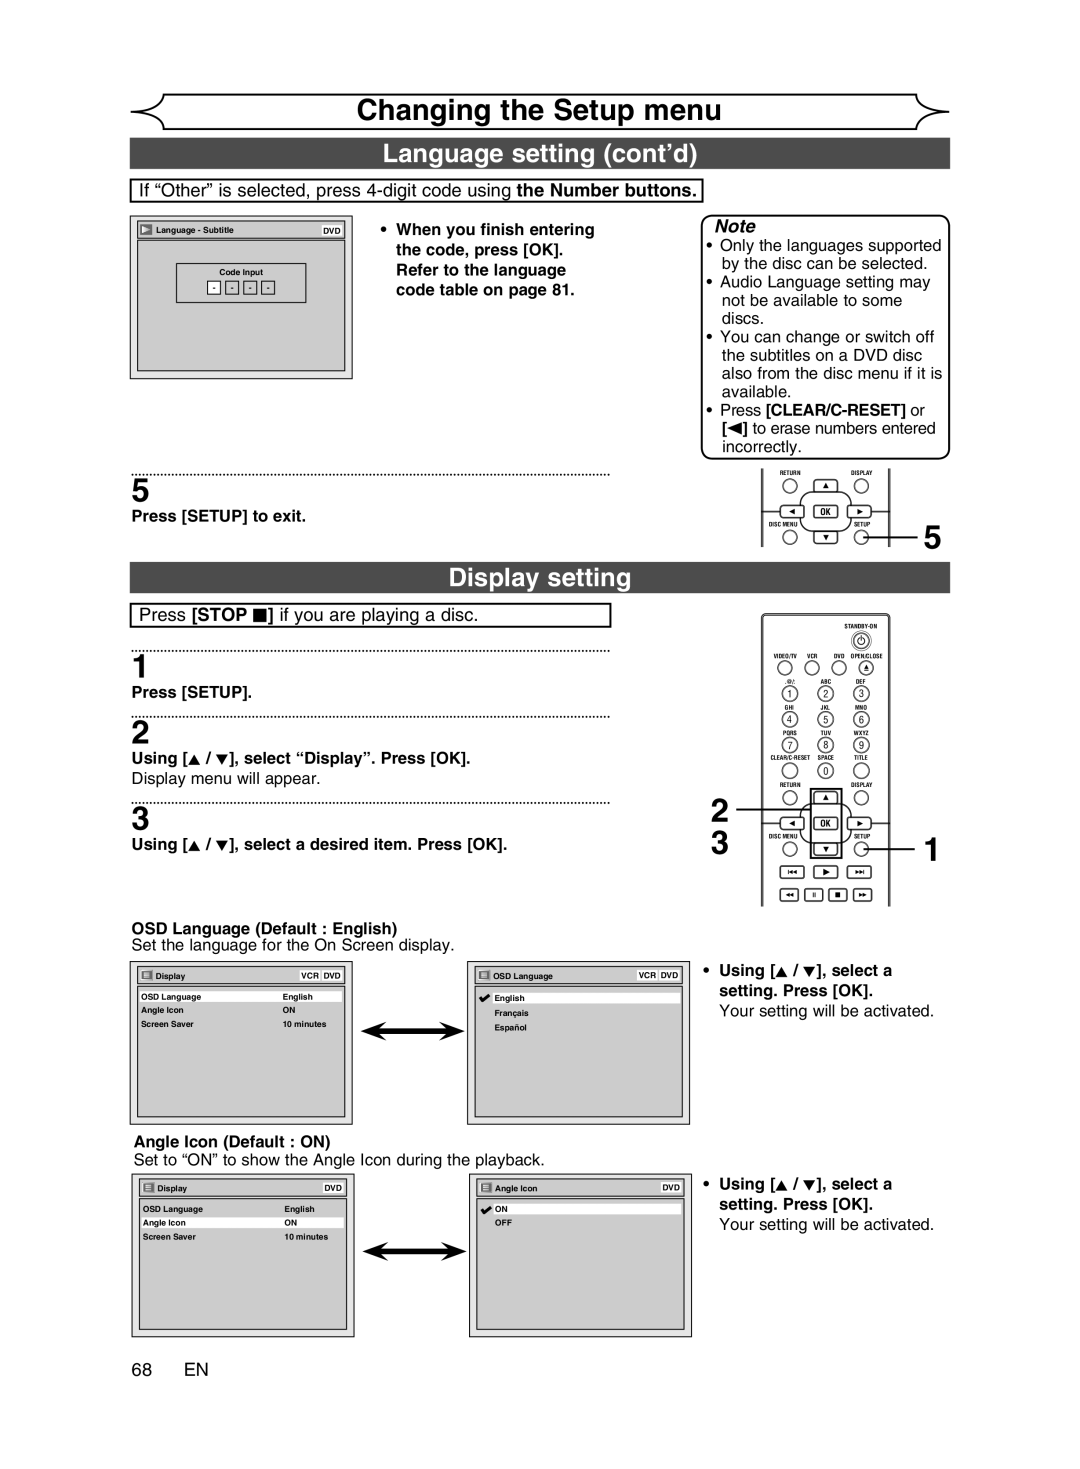 Magnavox cmwR20v6 manual Language setting cont’d, Display setting, Changing the Setup menu, 68 EN 